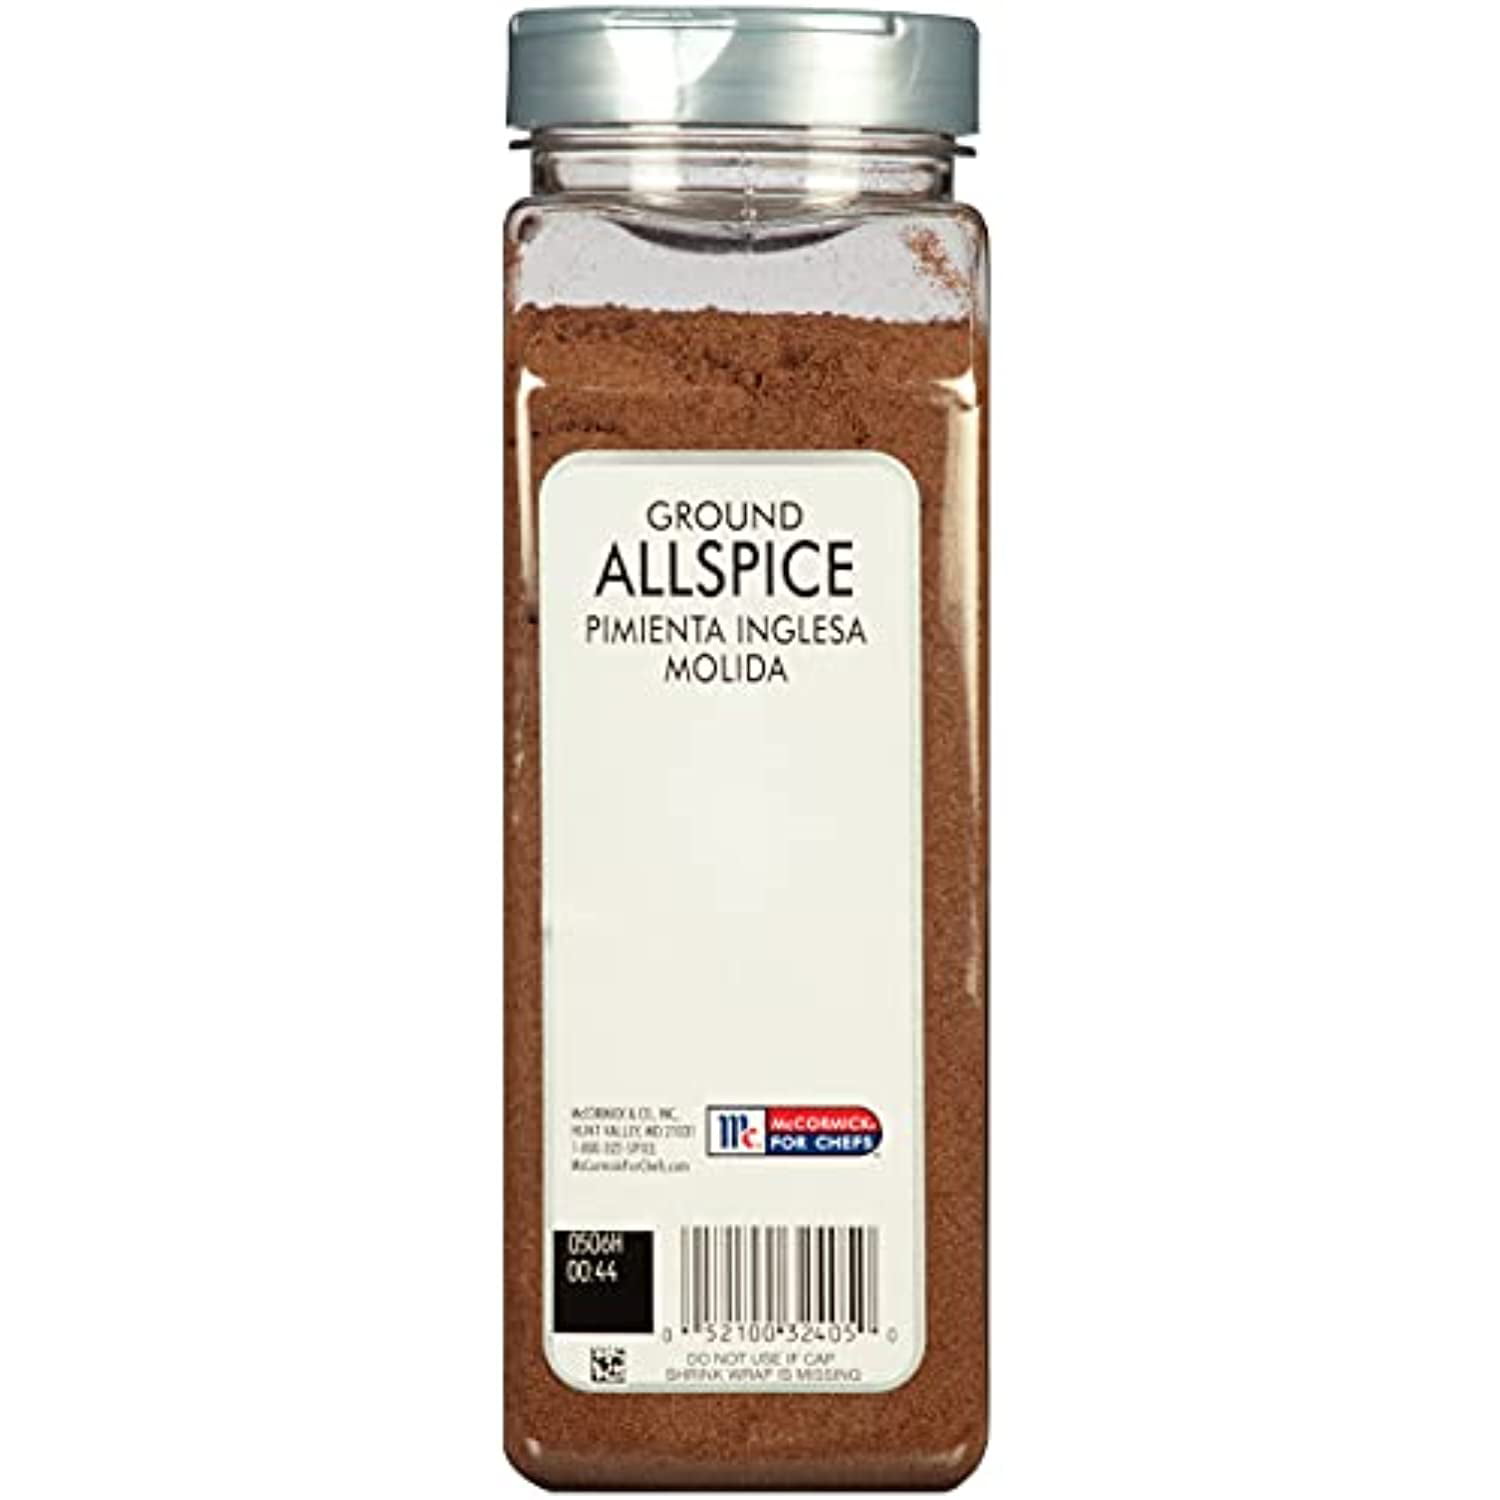 Ground Allspice - Emporium Packaging & Spice Co.